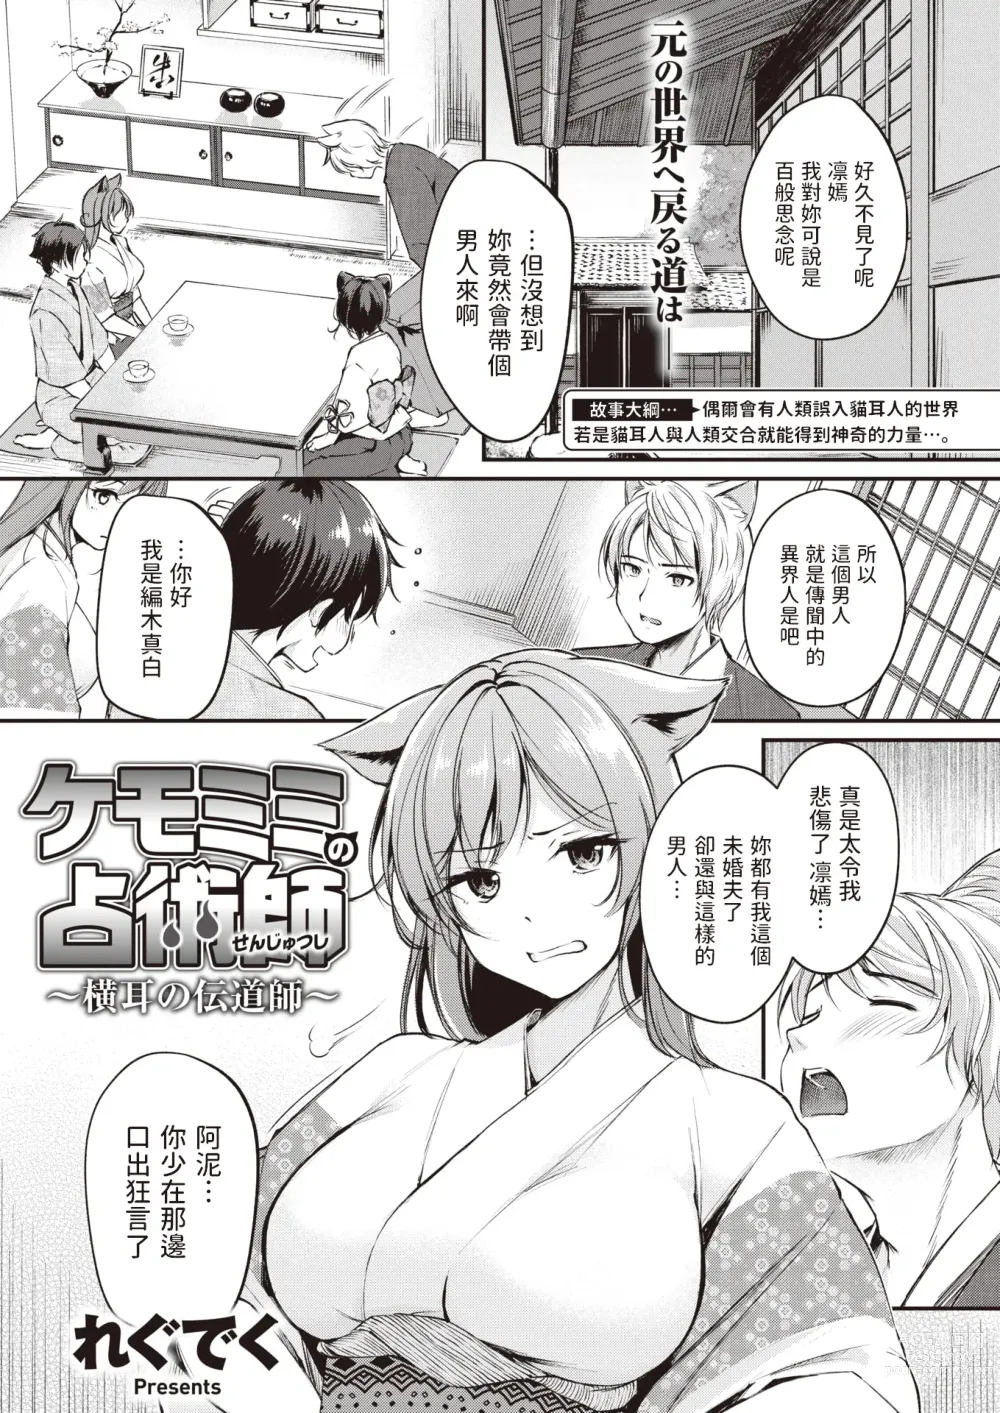 Page 1 of manga Kemomimi no Senjutsushi ~Yoko Mimi no Dendoushi~